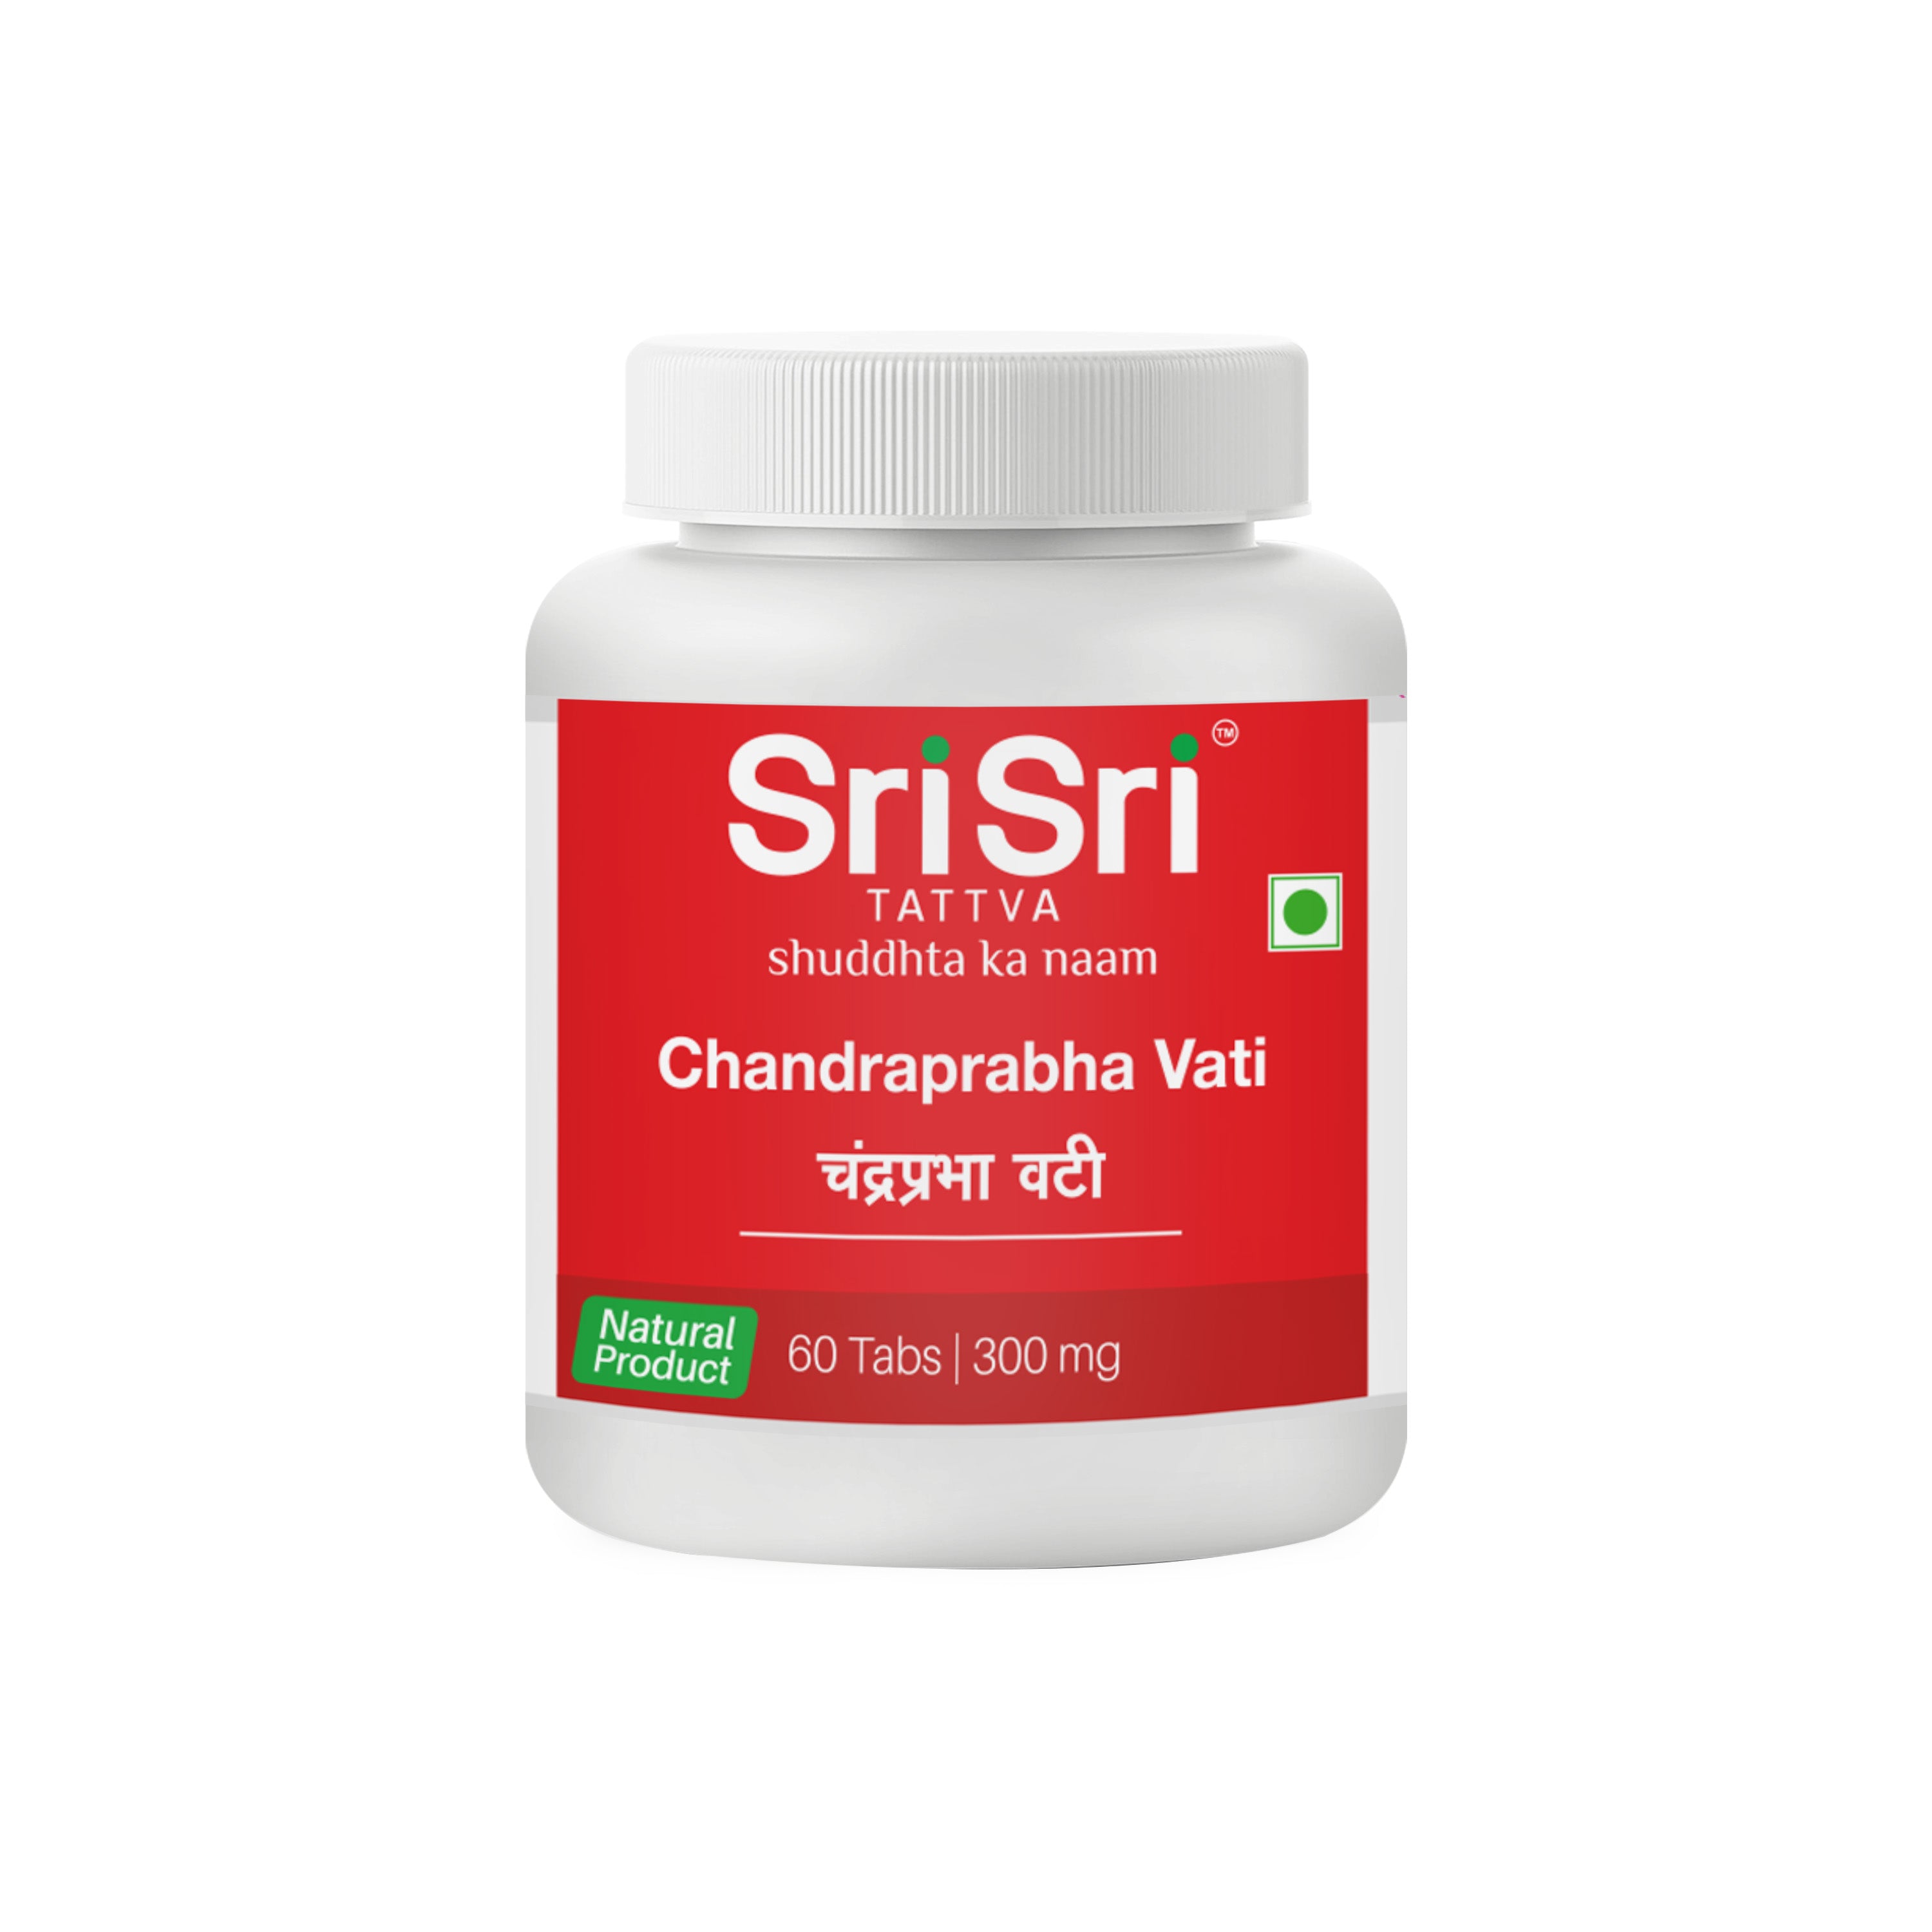 Chandraprabha Vati, 60 Tabs | 300 mg